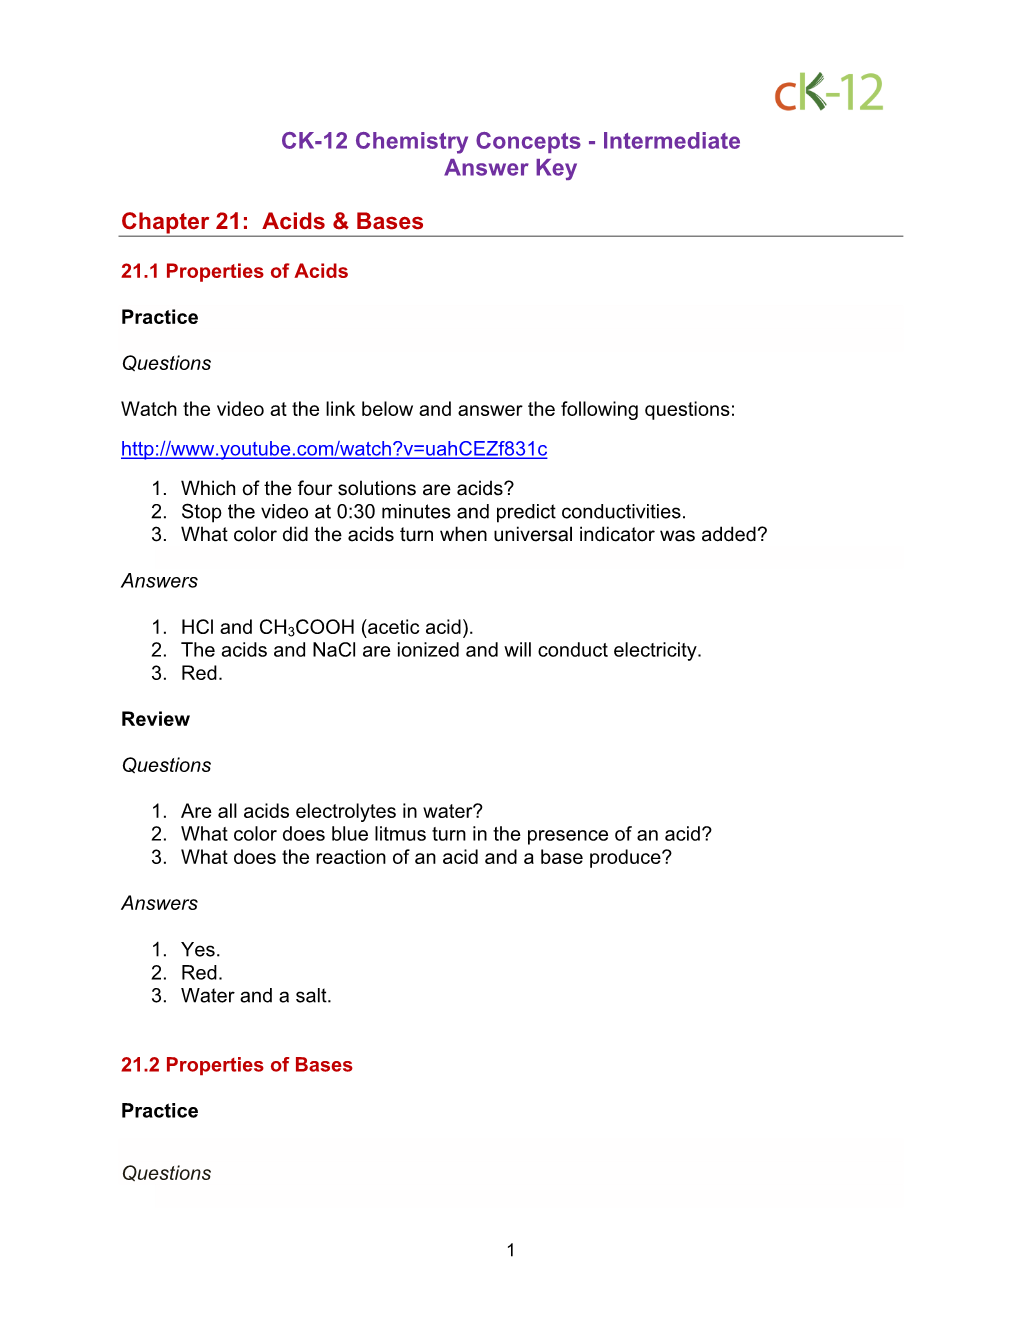 Intermediate Answer Key Chapter 21: Acids & Bases